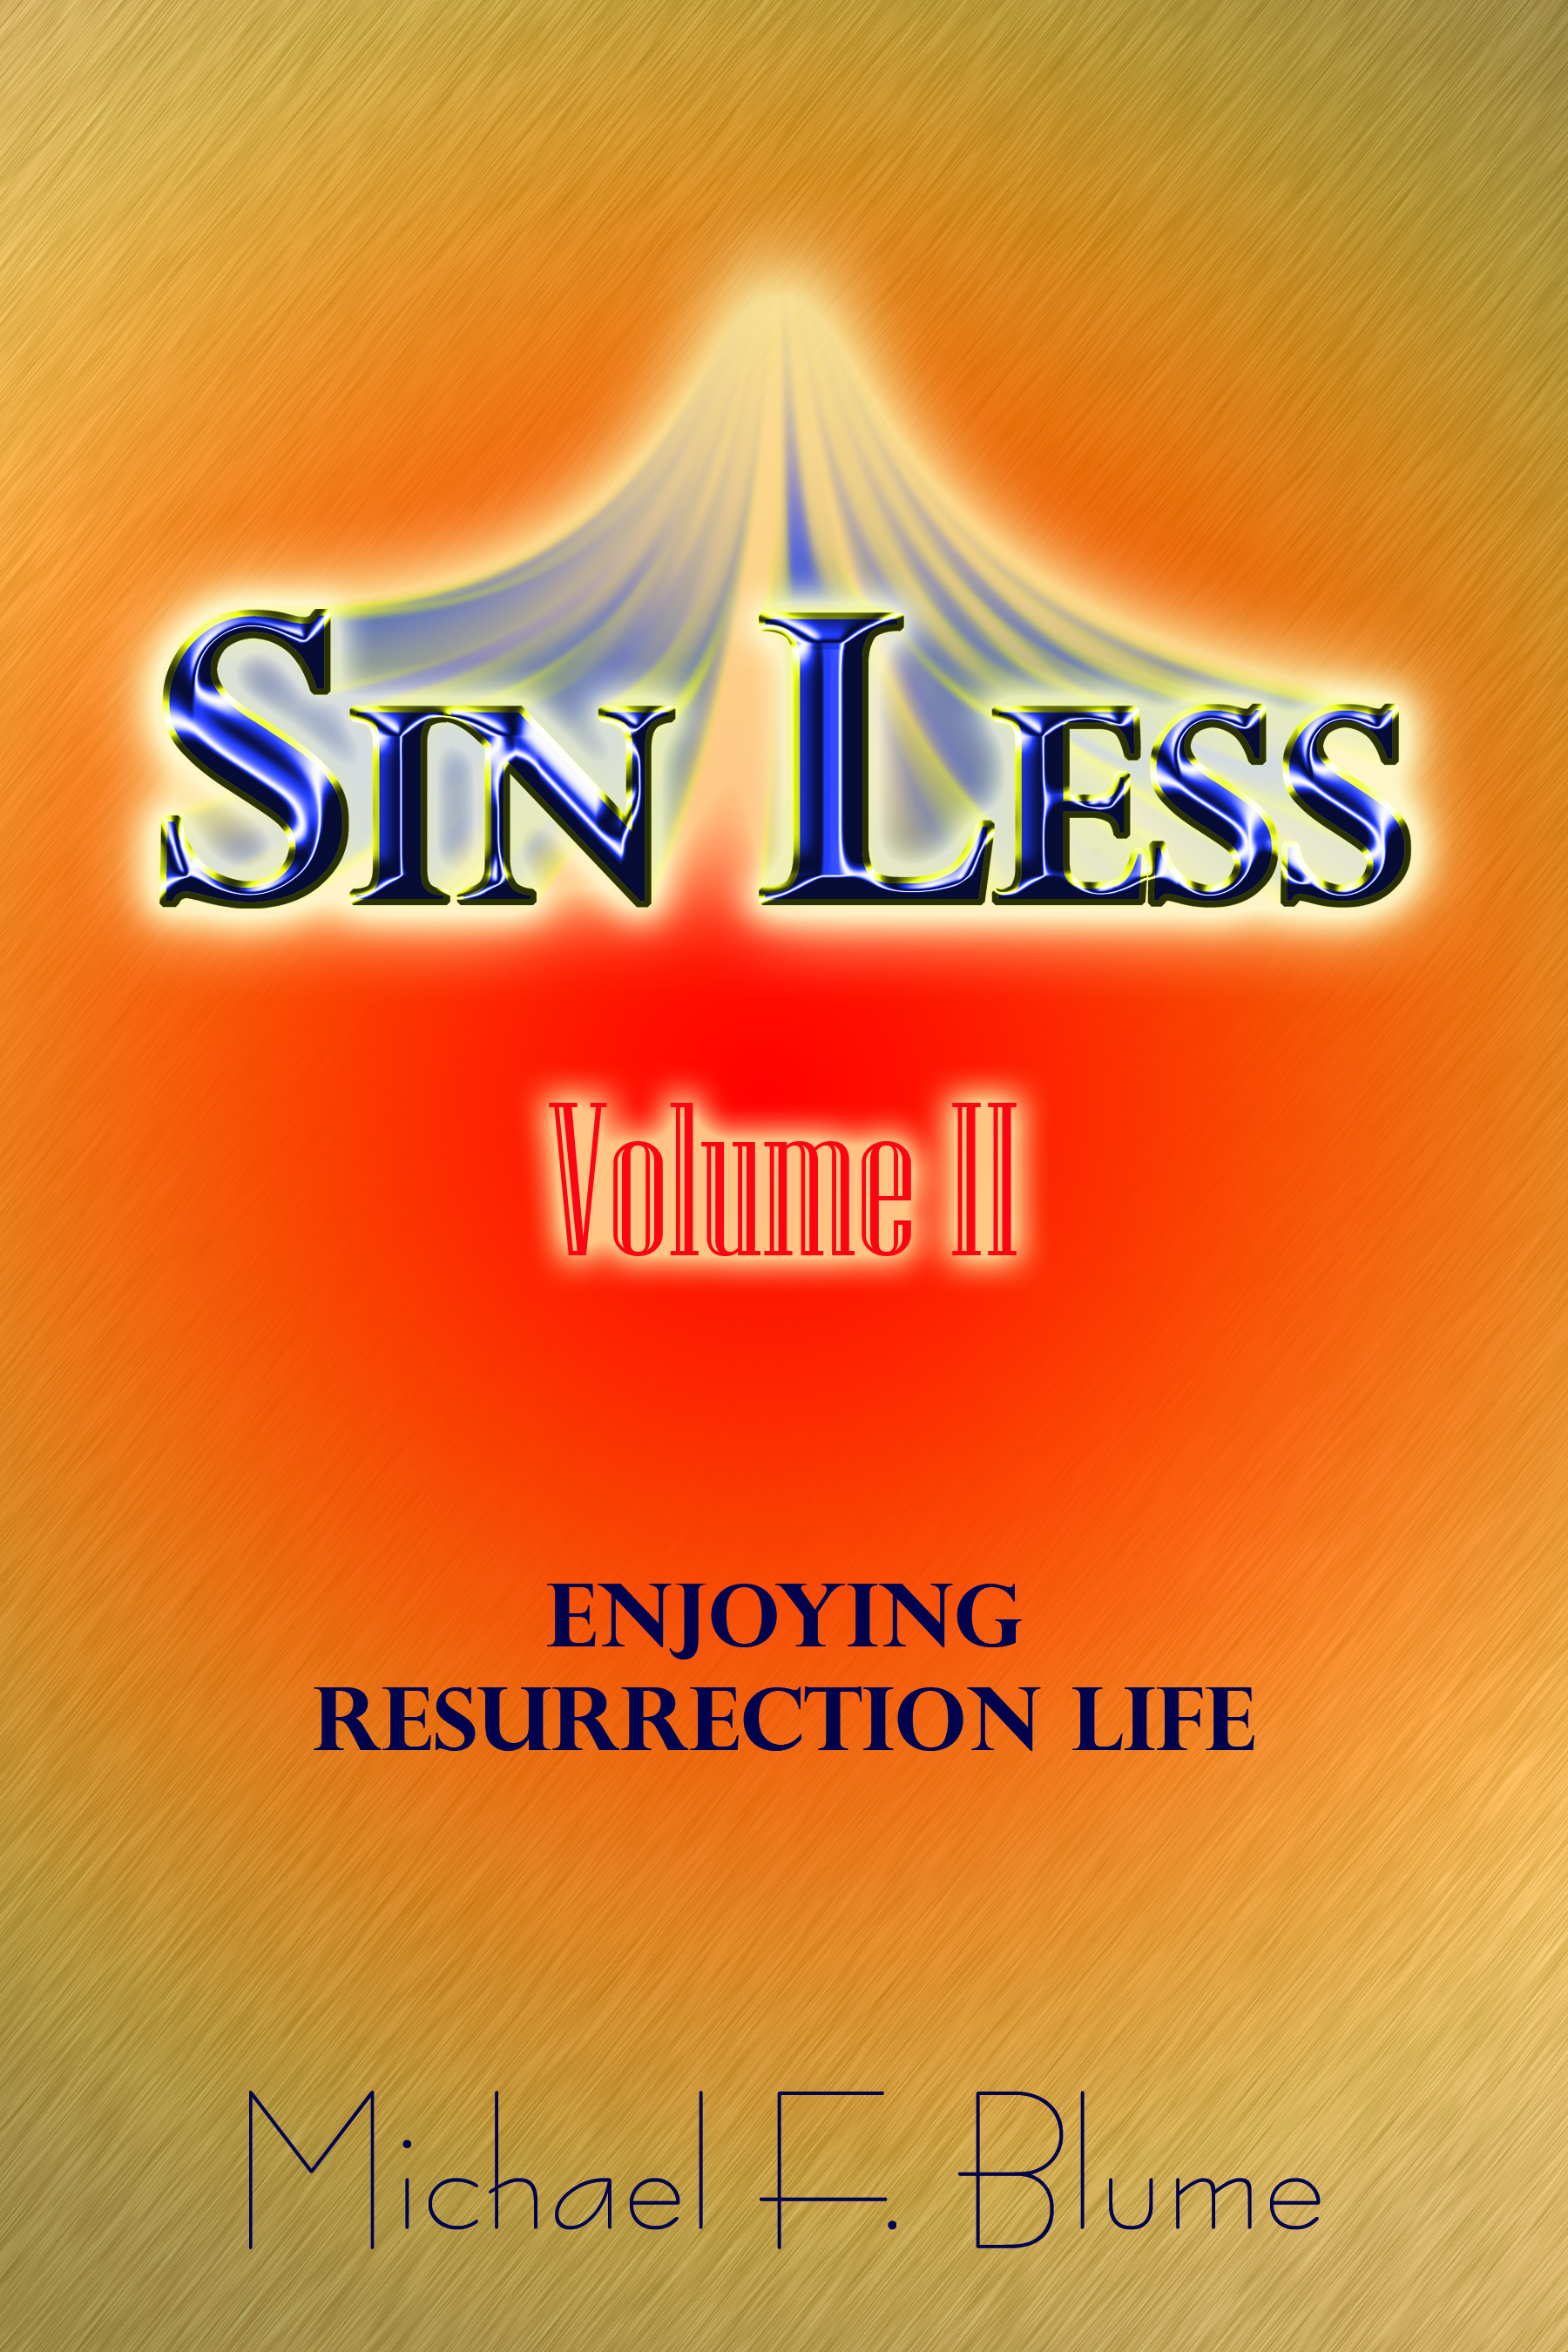 Sin Less